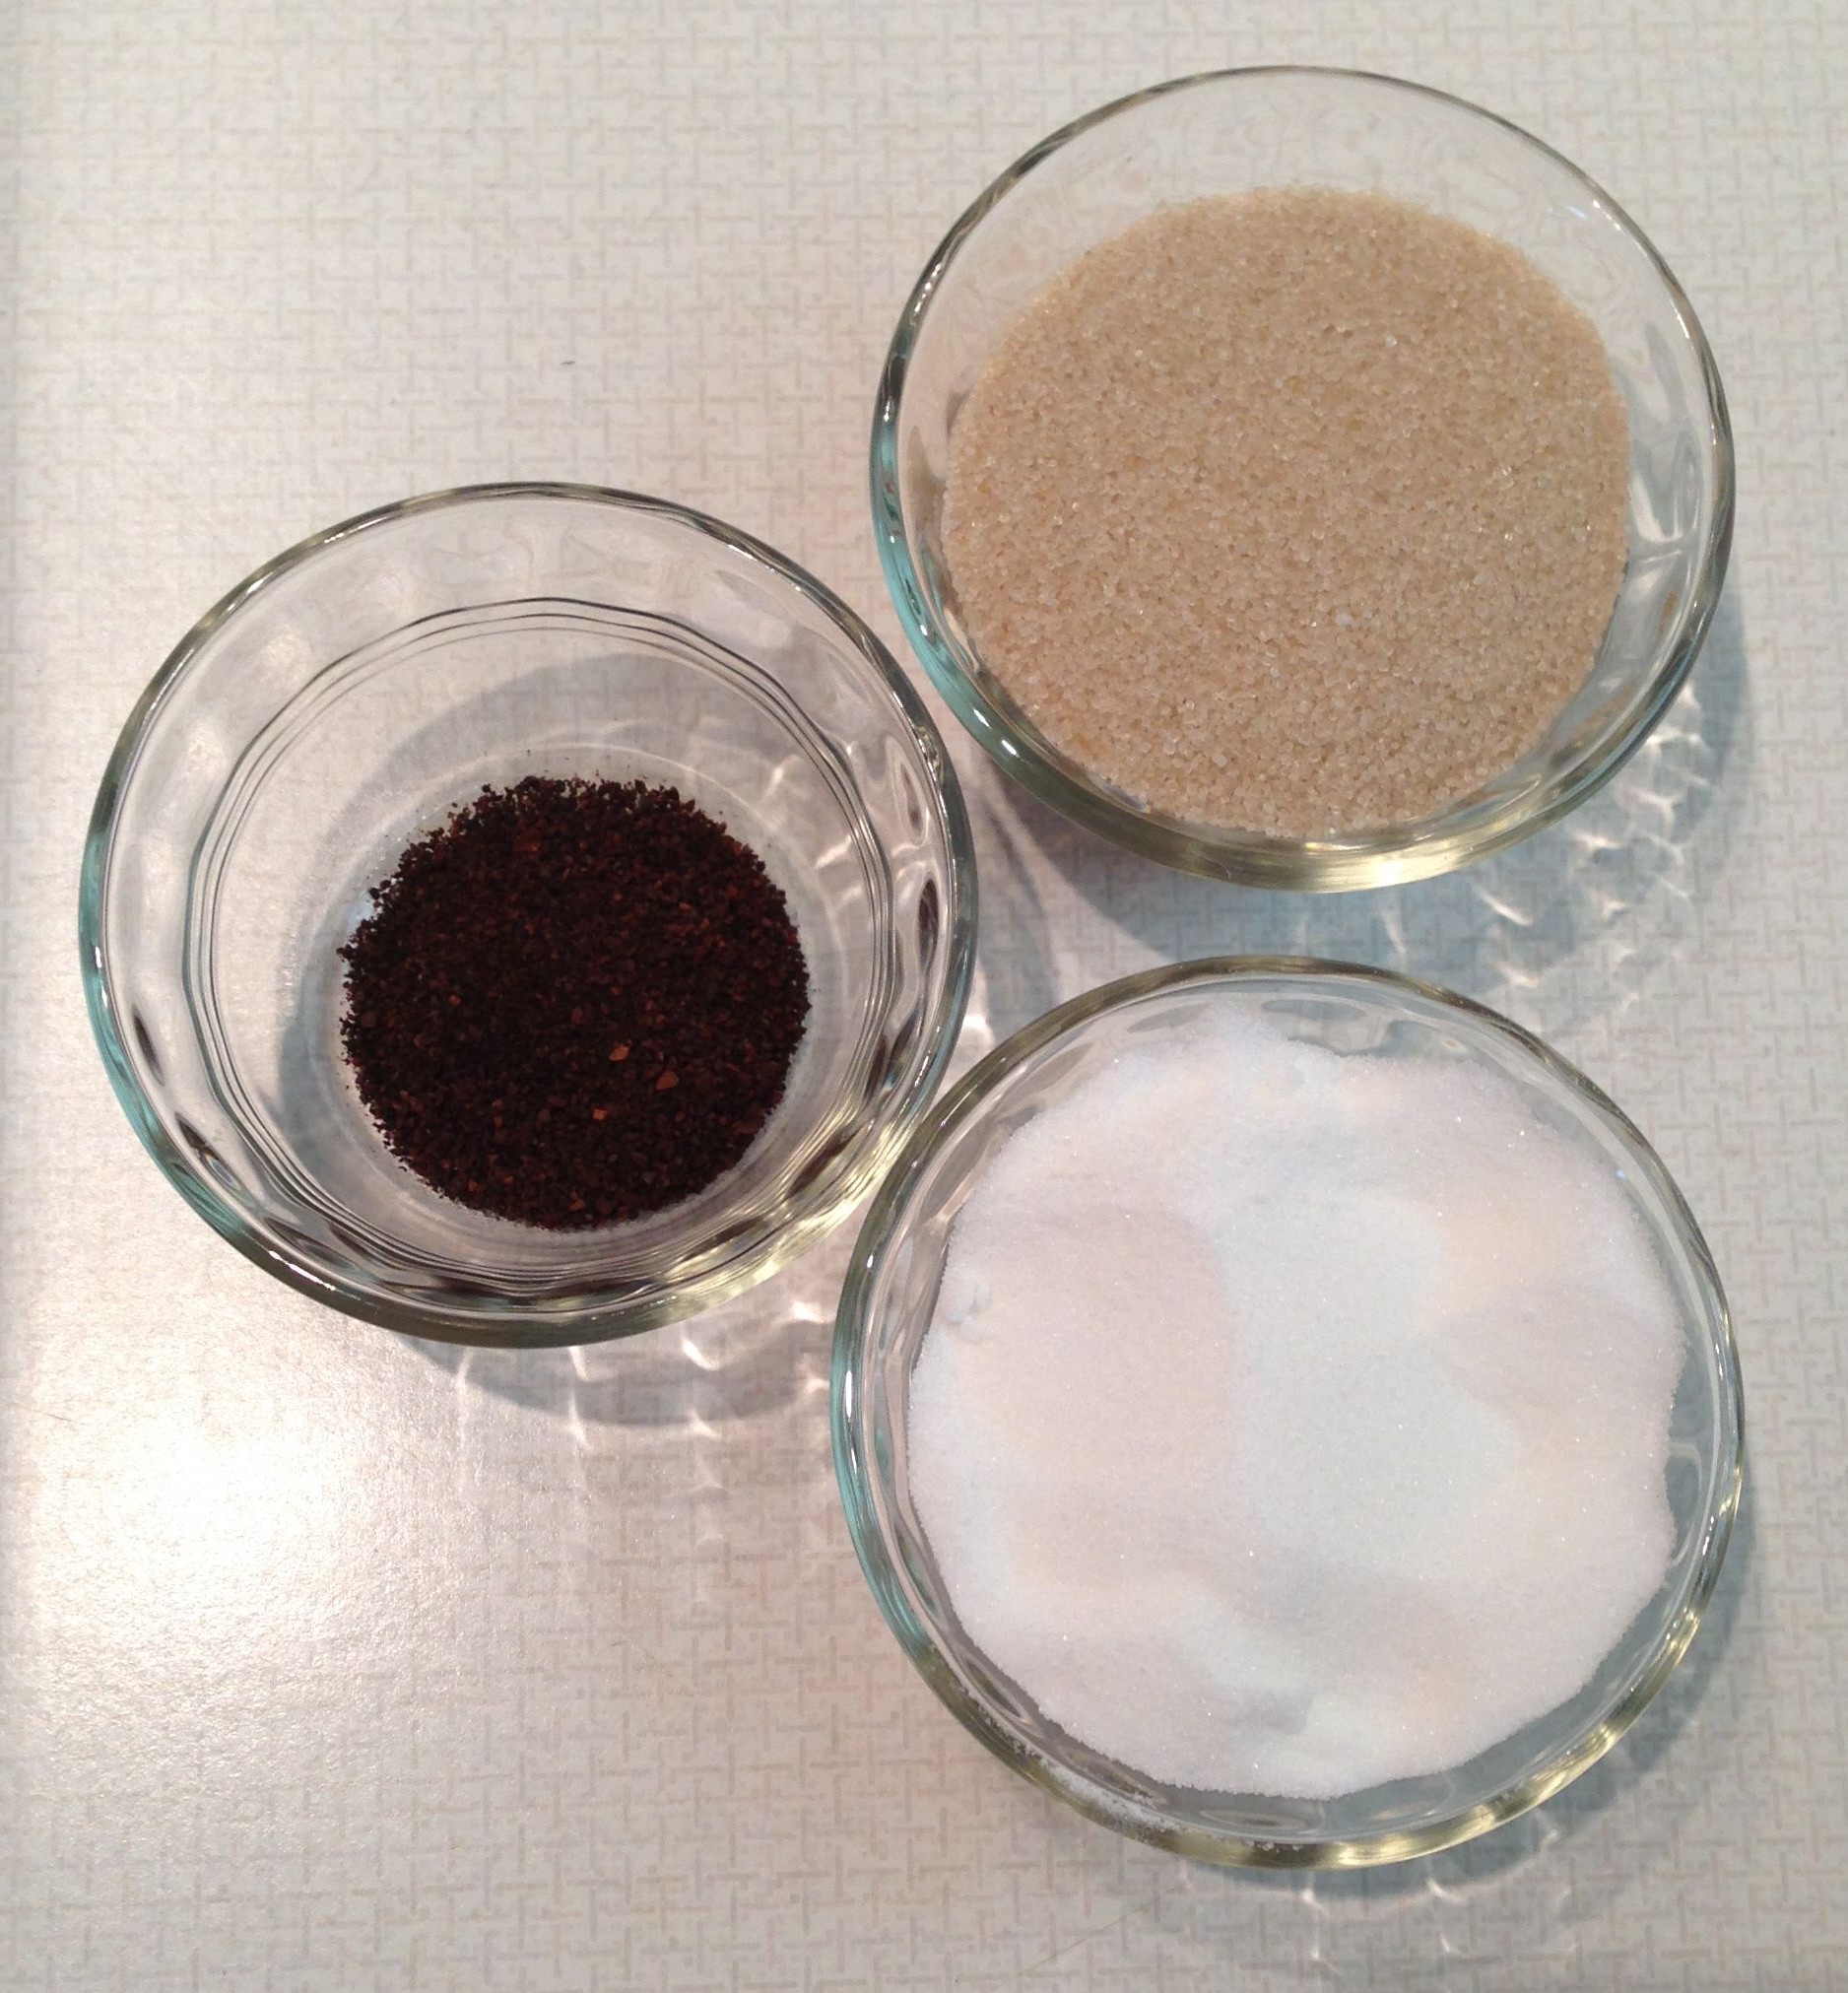 At top, turbinado sugar, at bottom white sugar; coffee on the left.